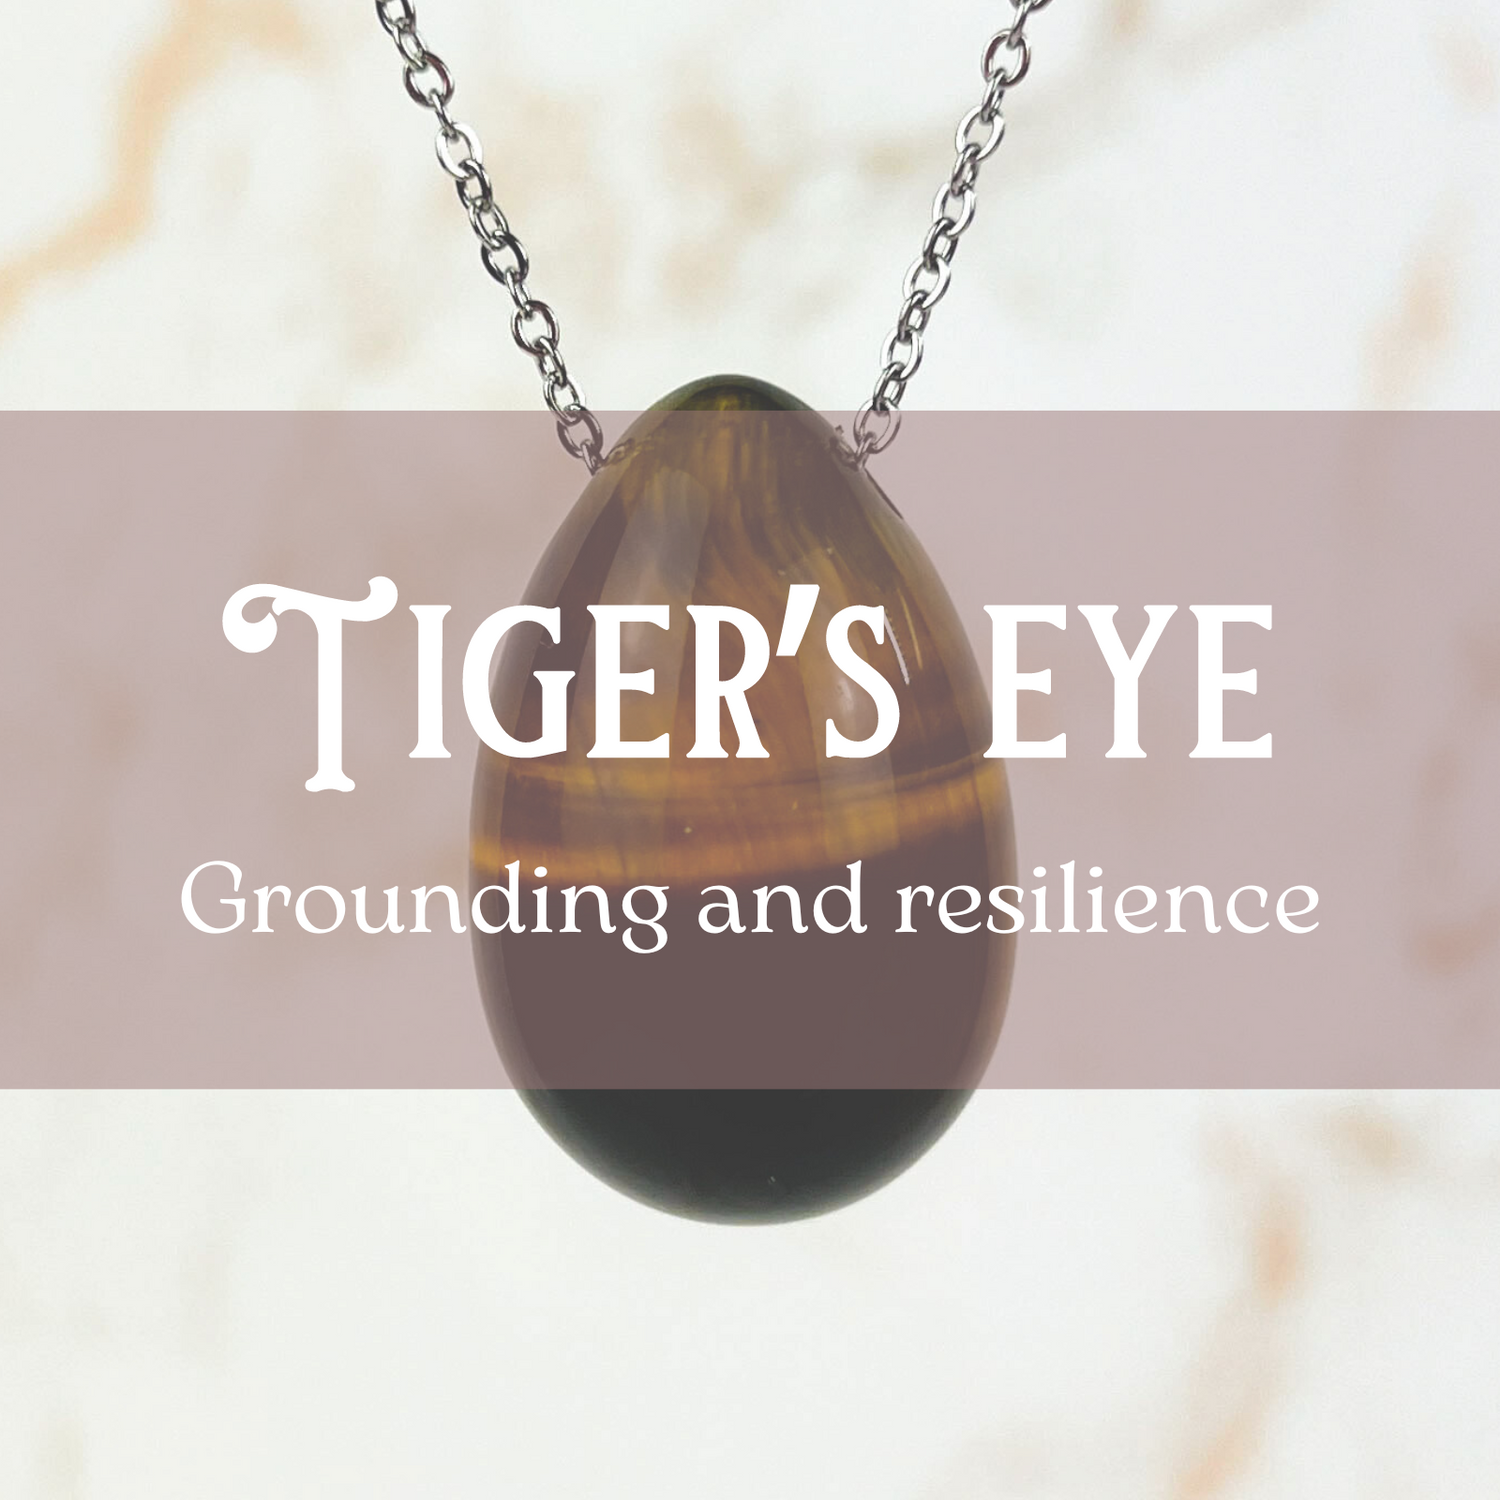 Tiger's eye jewelry